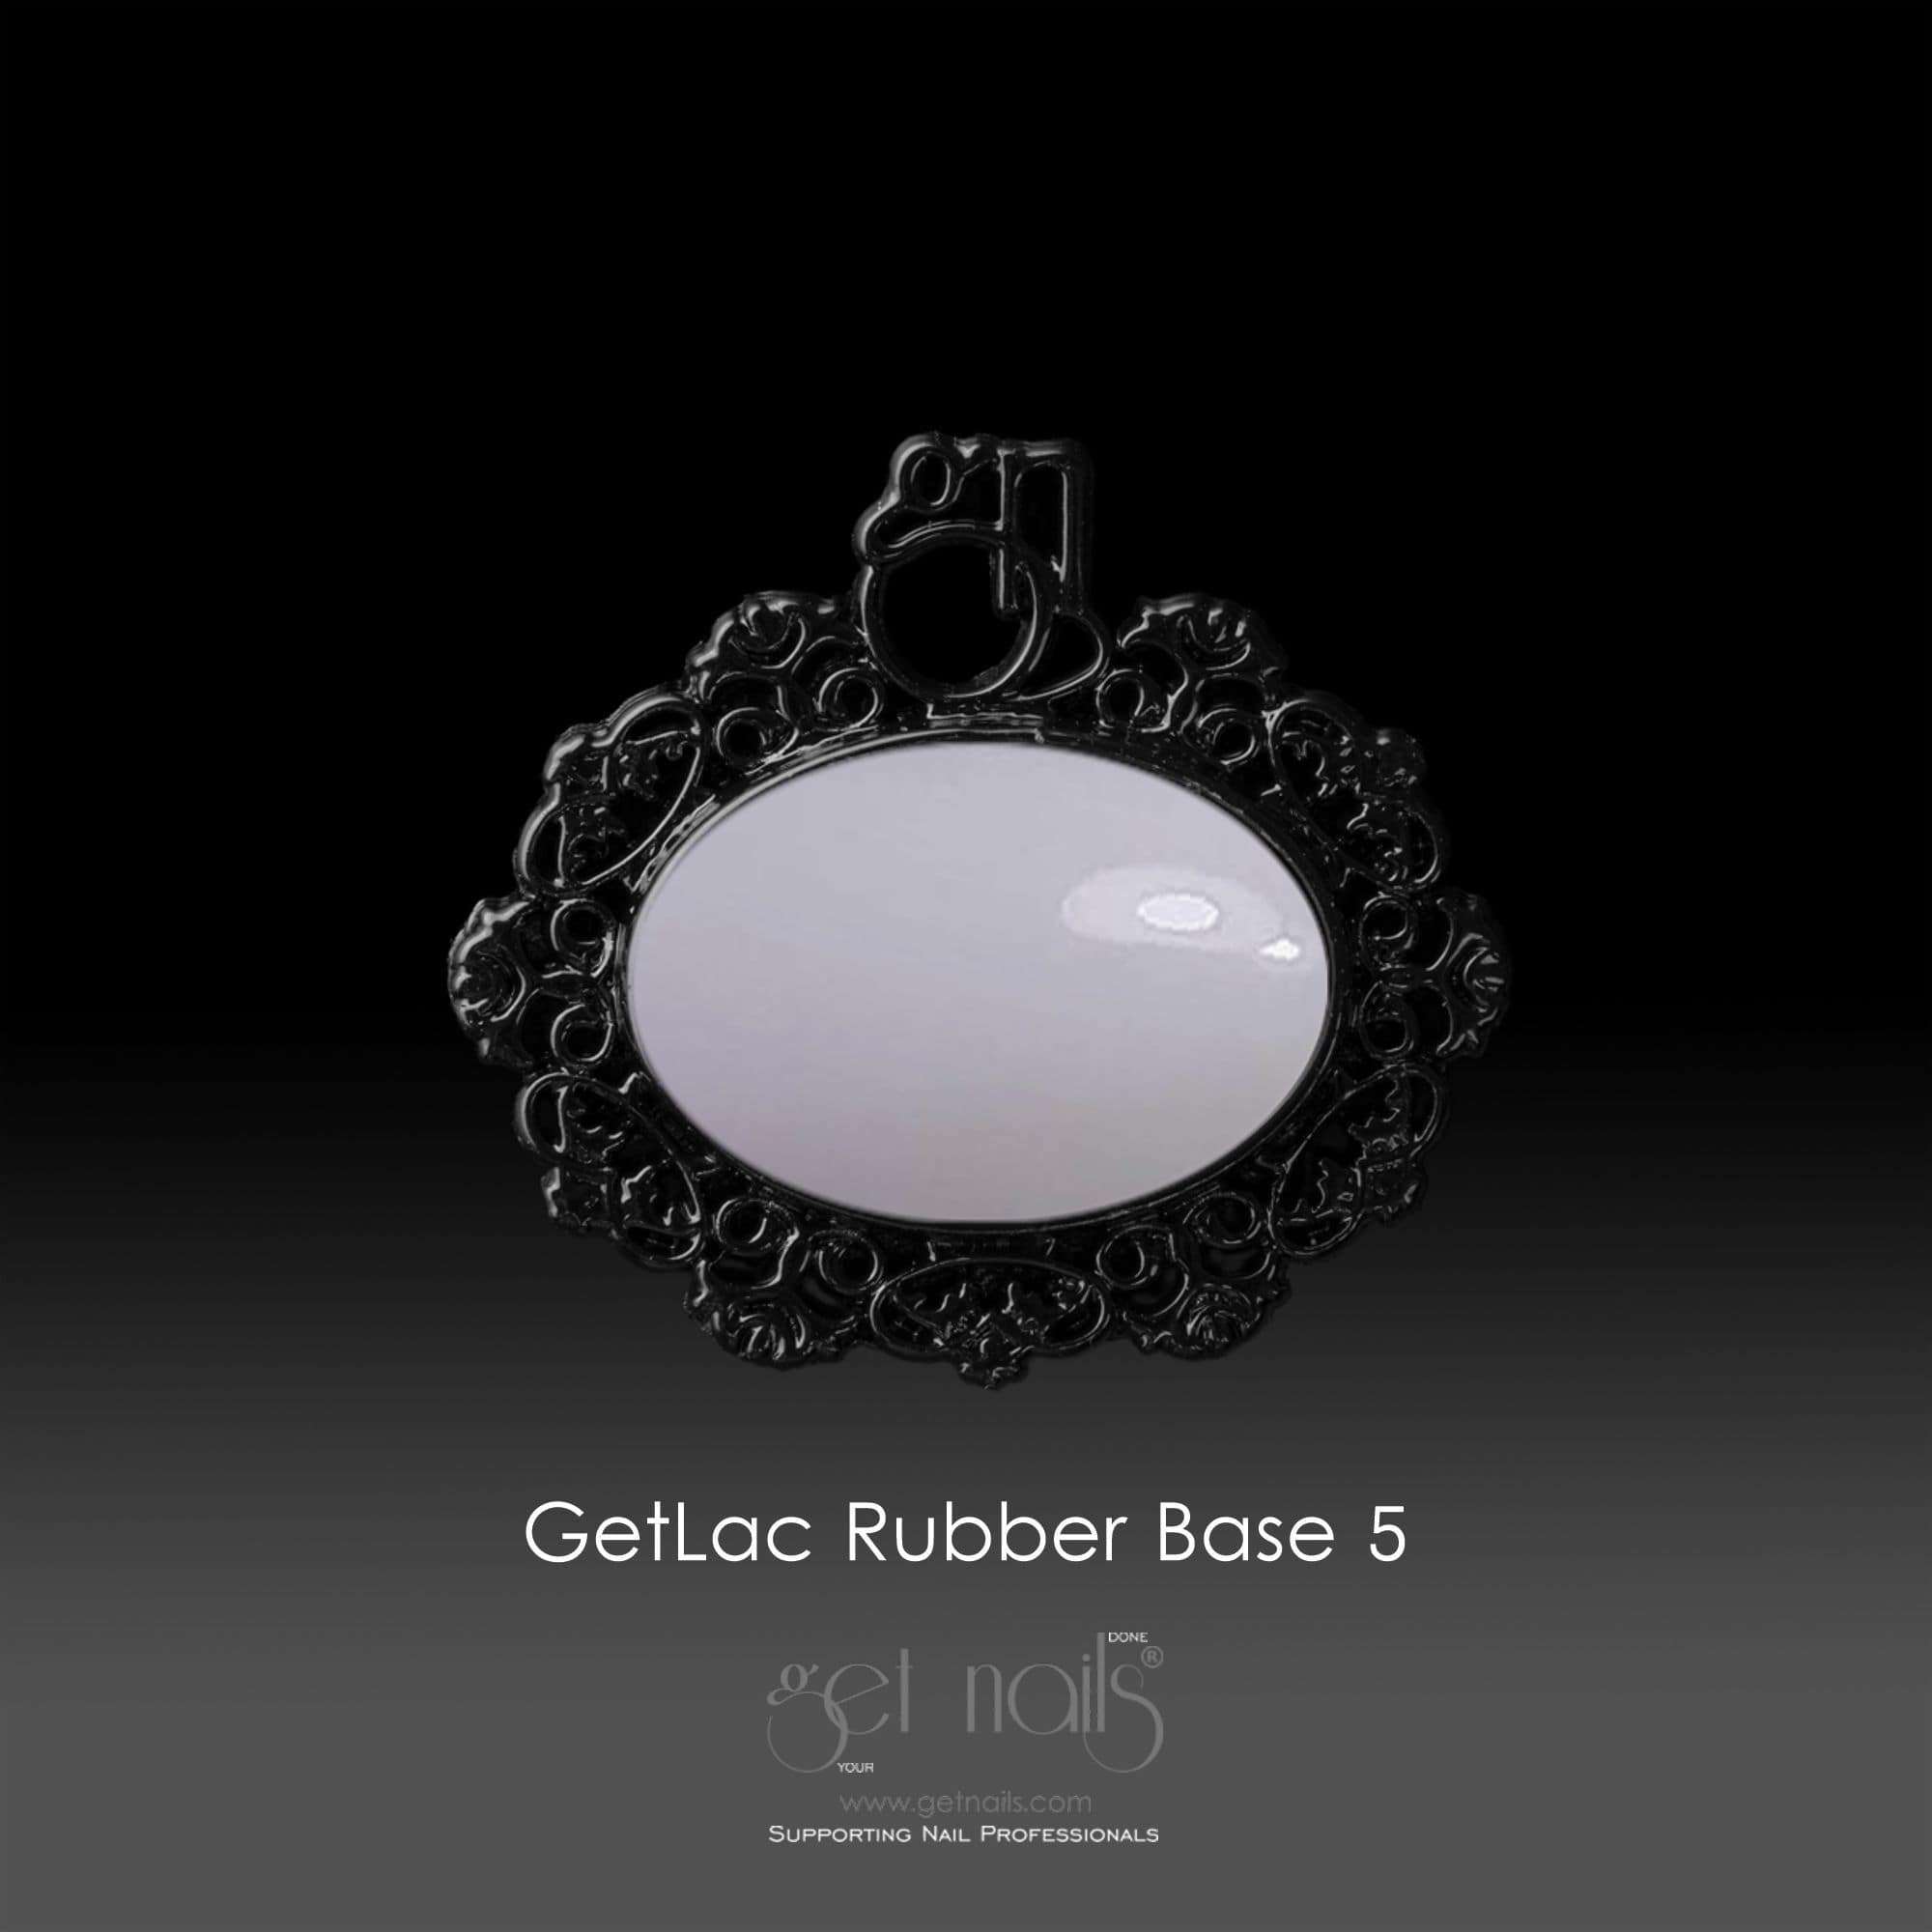 Get Nails Austria - GetLac Rubber Base 5 15g